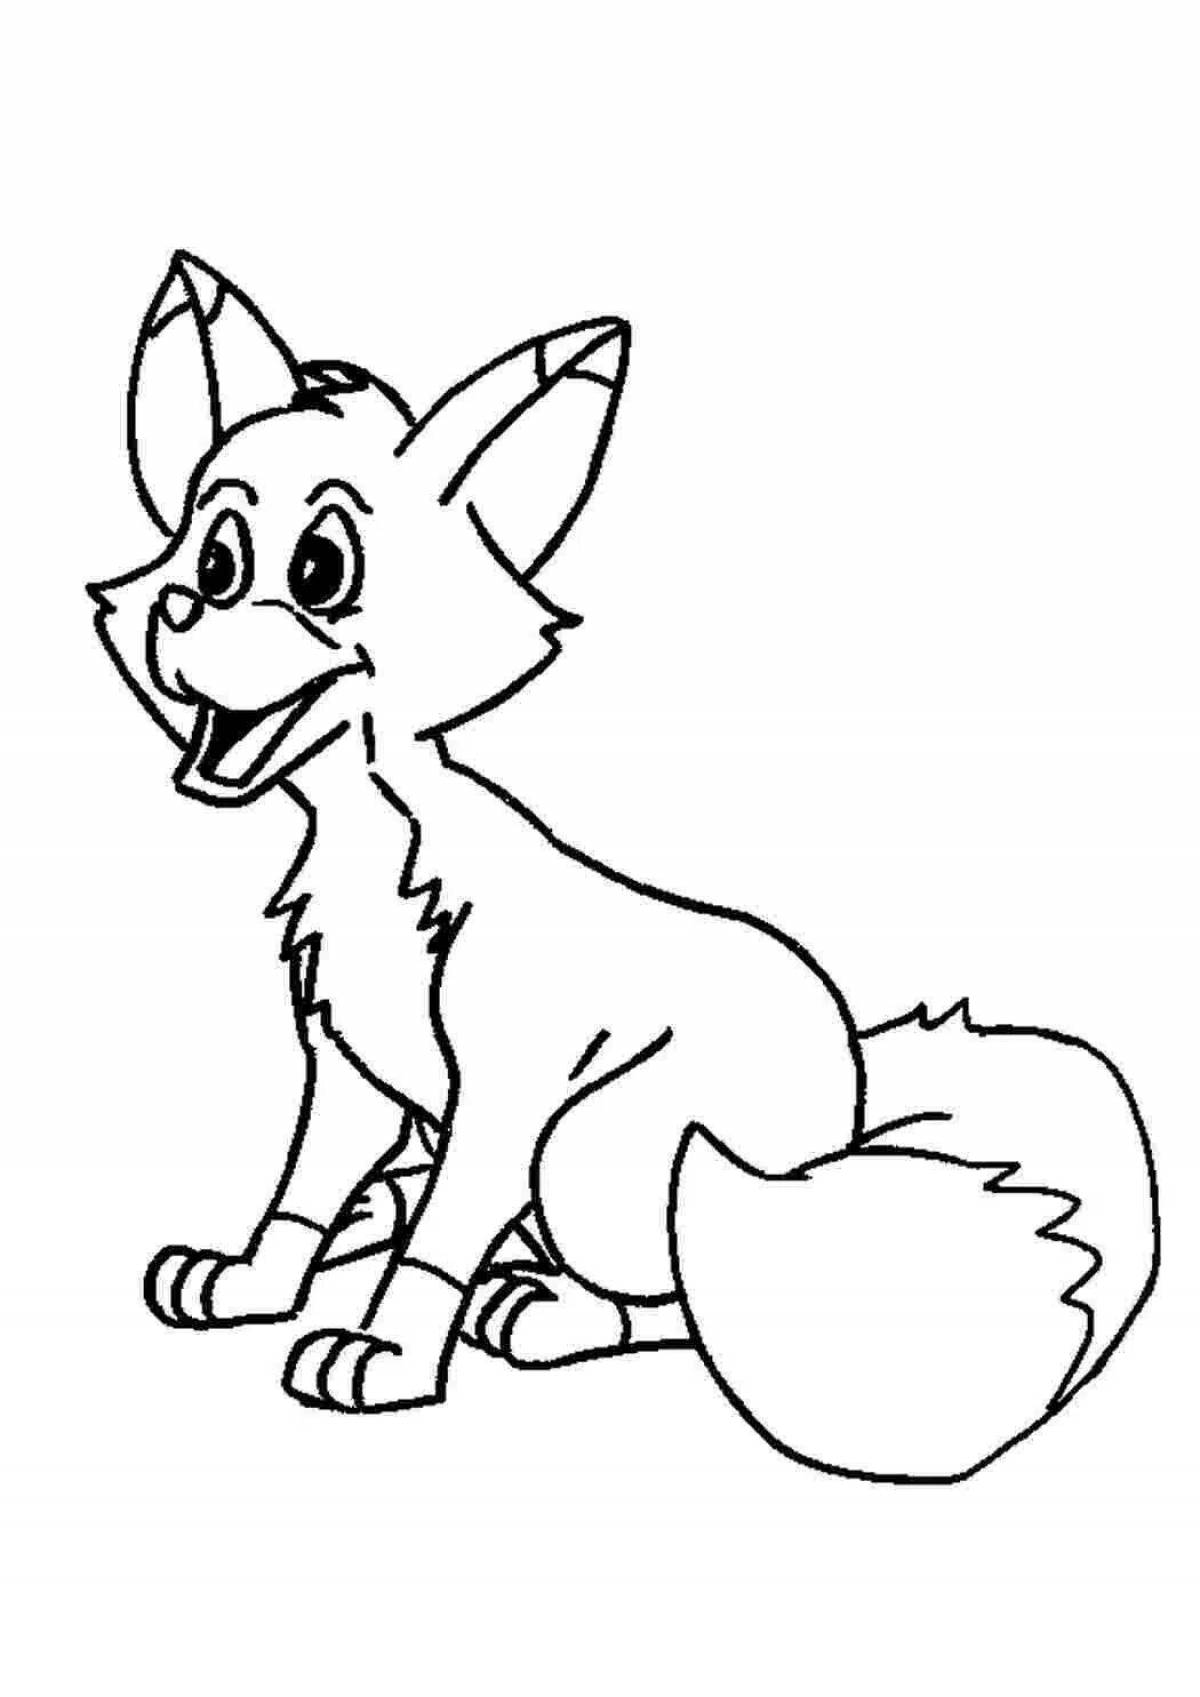 Joyful fox coloring book for kids